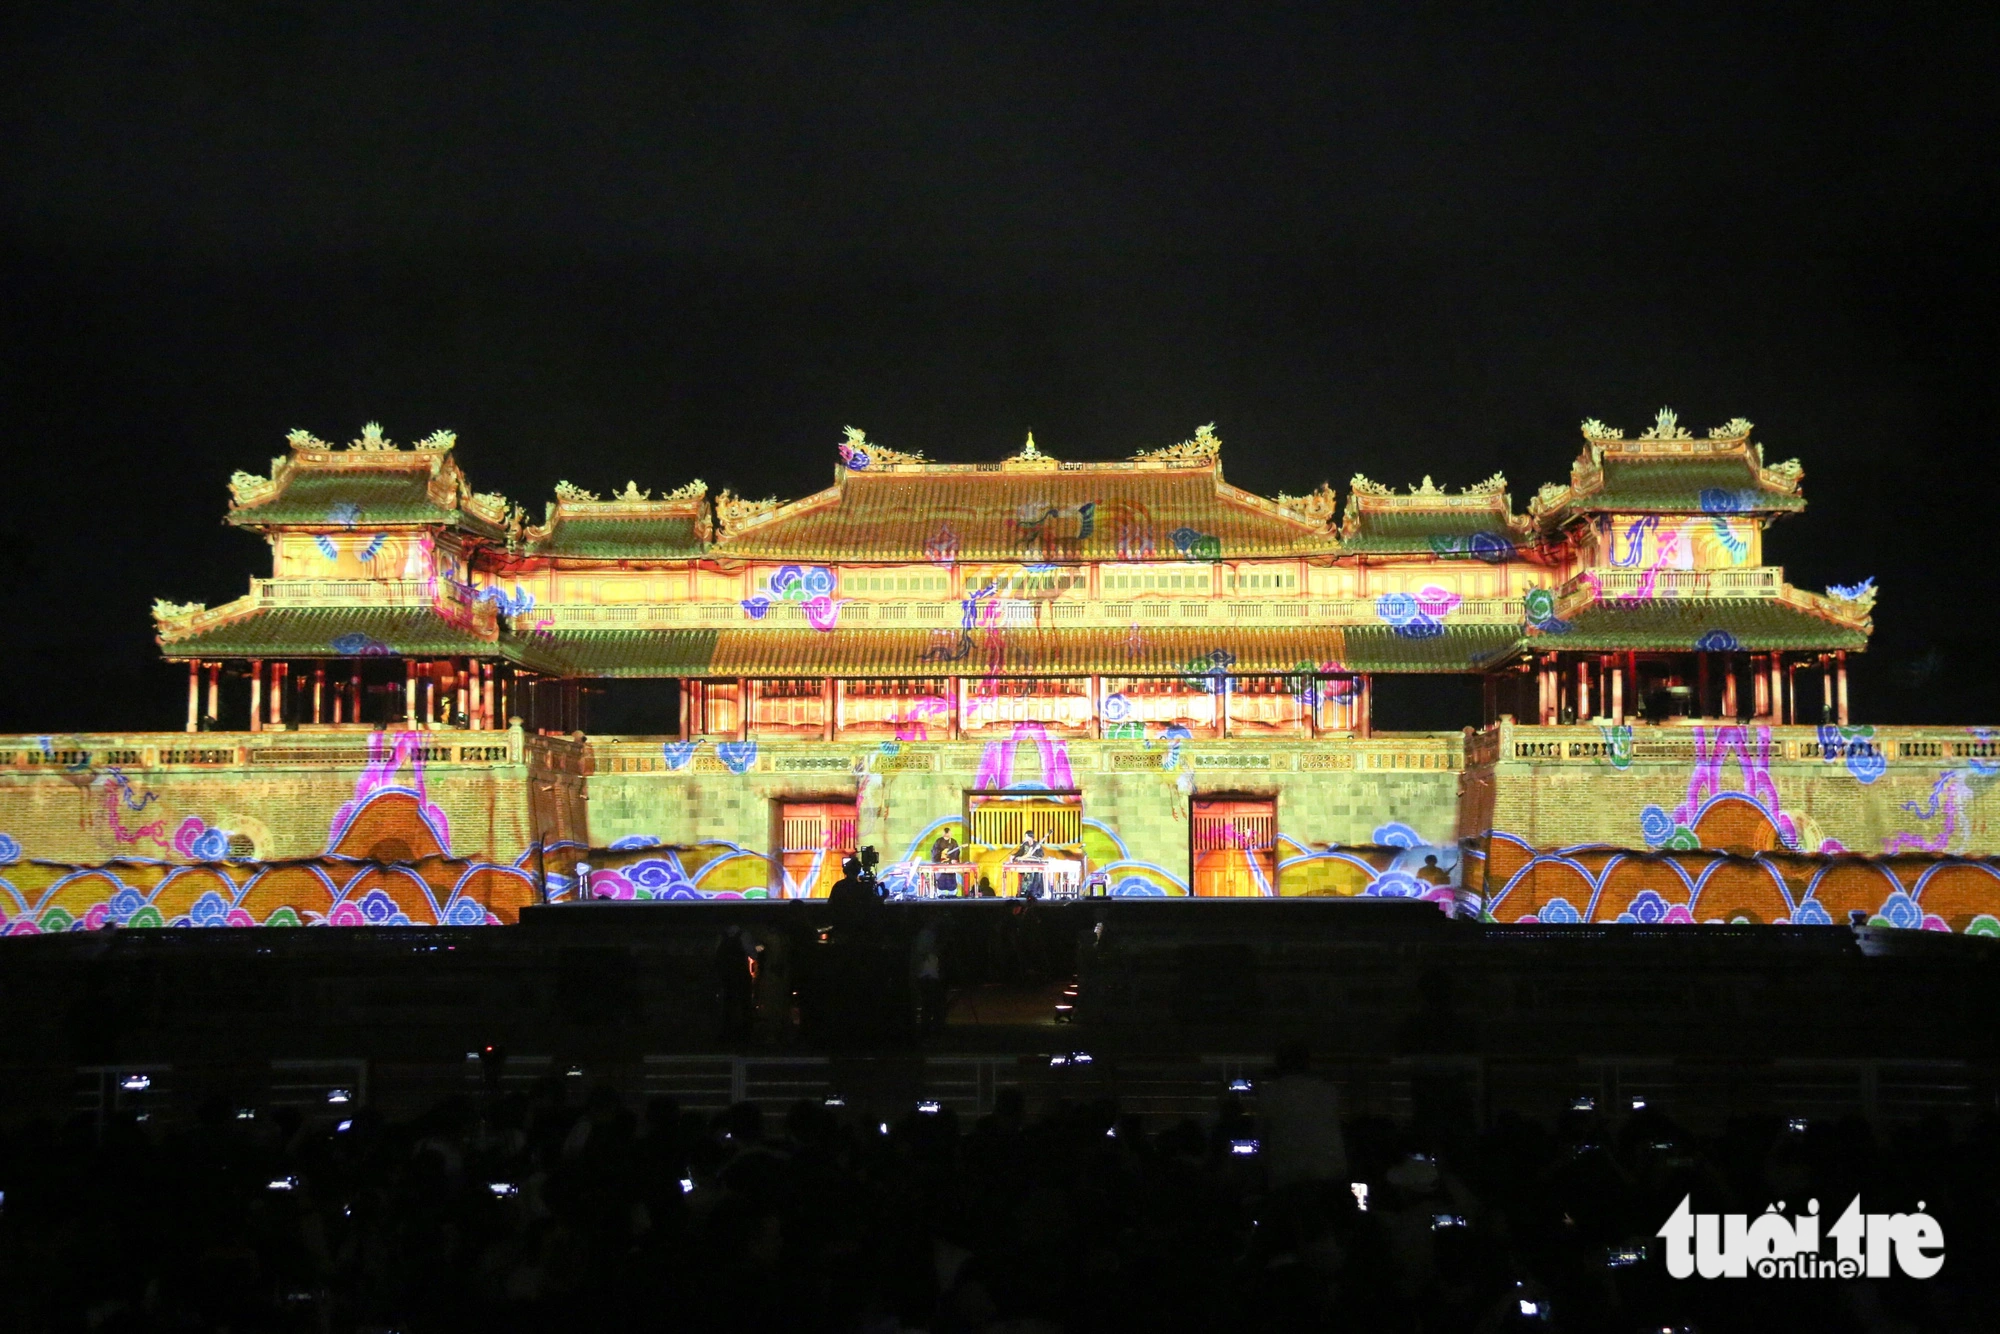 French artistic celebration illuminates Vietnam’s Hue